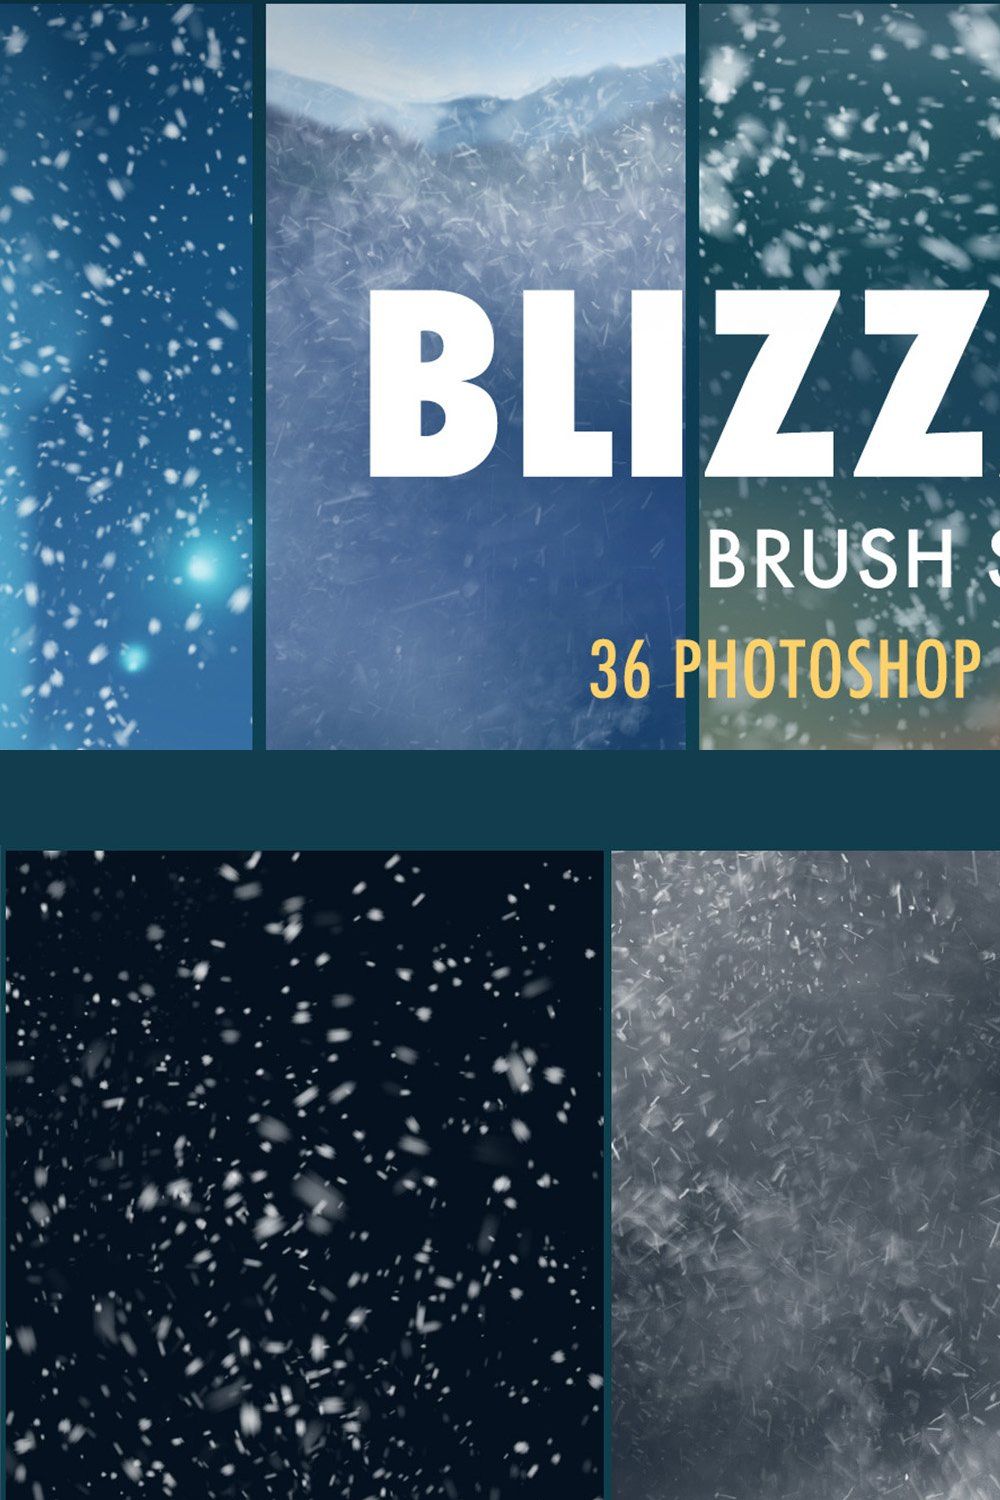 Blizzard brush set pinterest preview image.